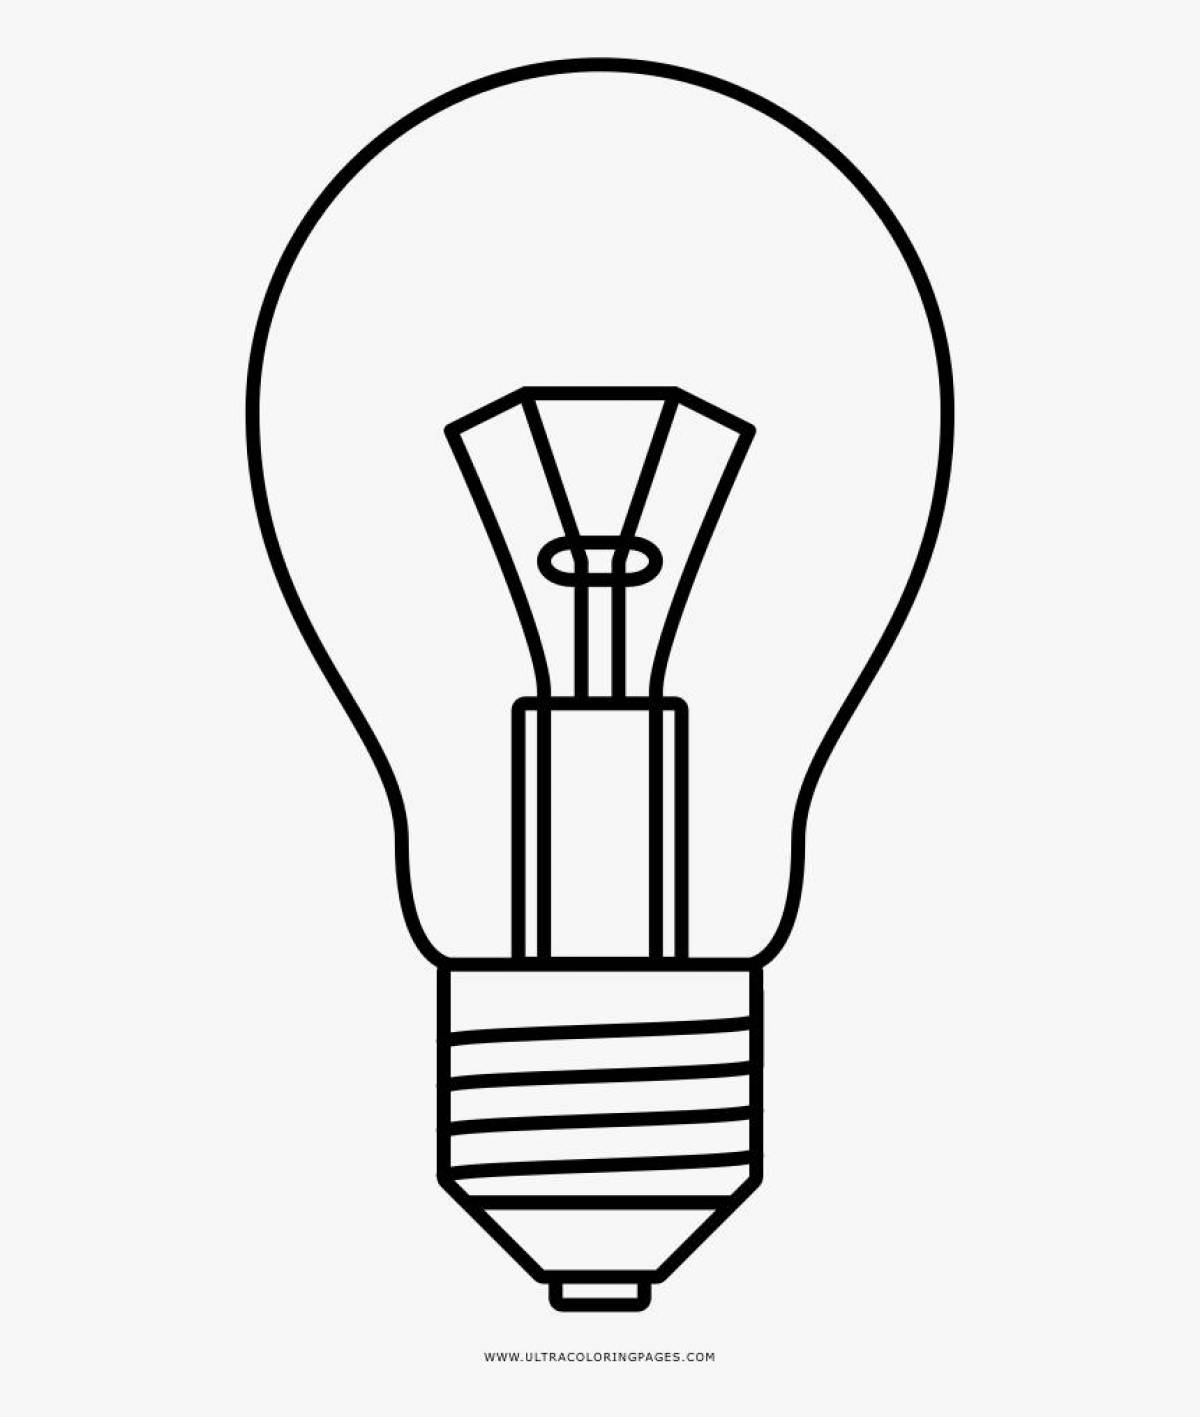 Fun light bulb coloring